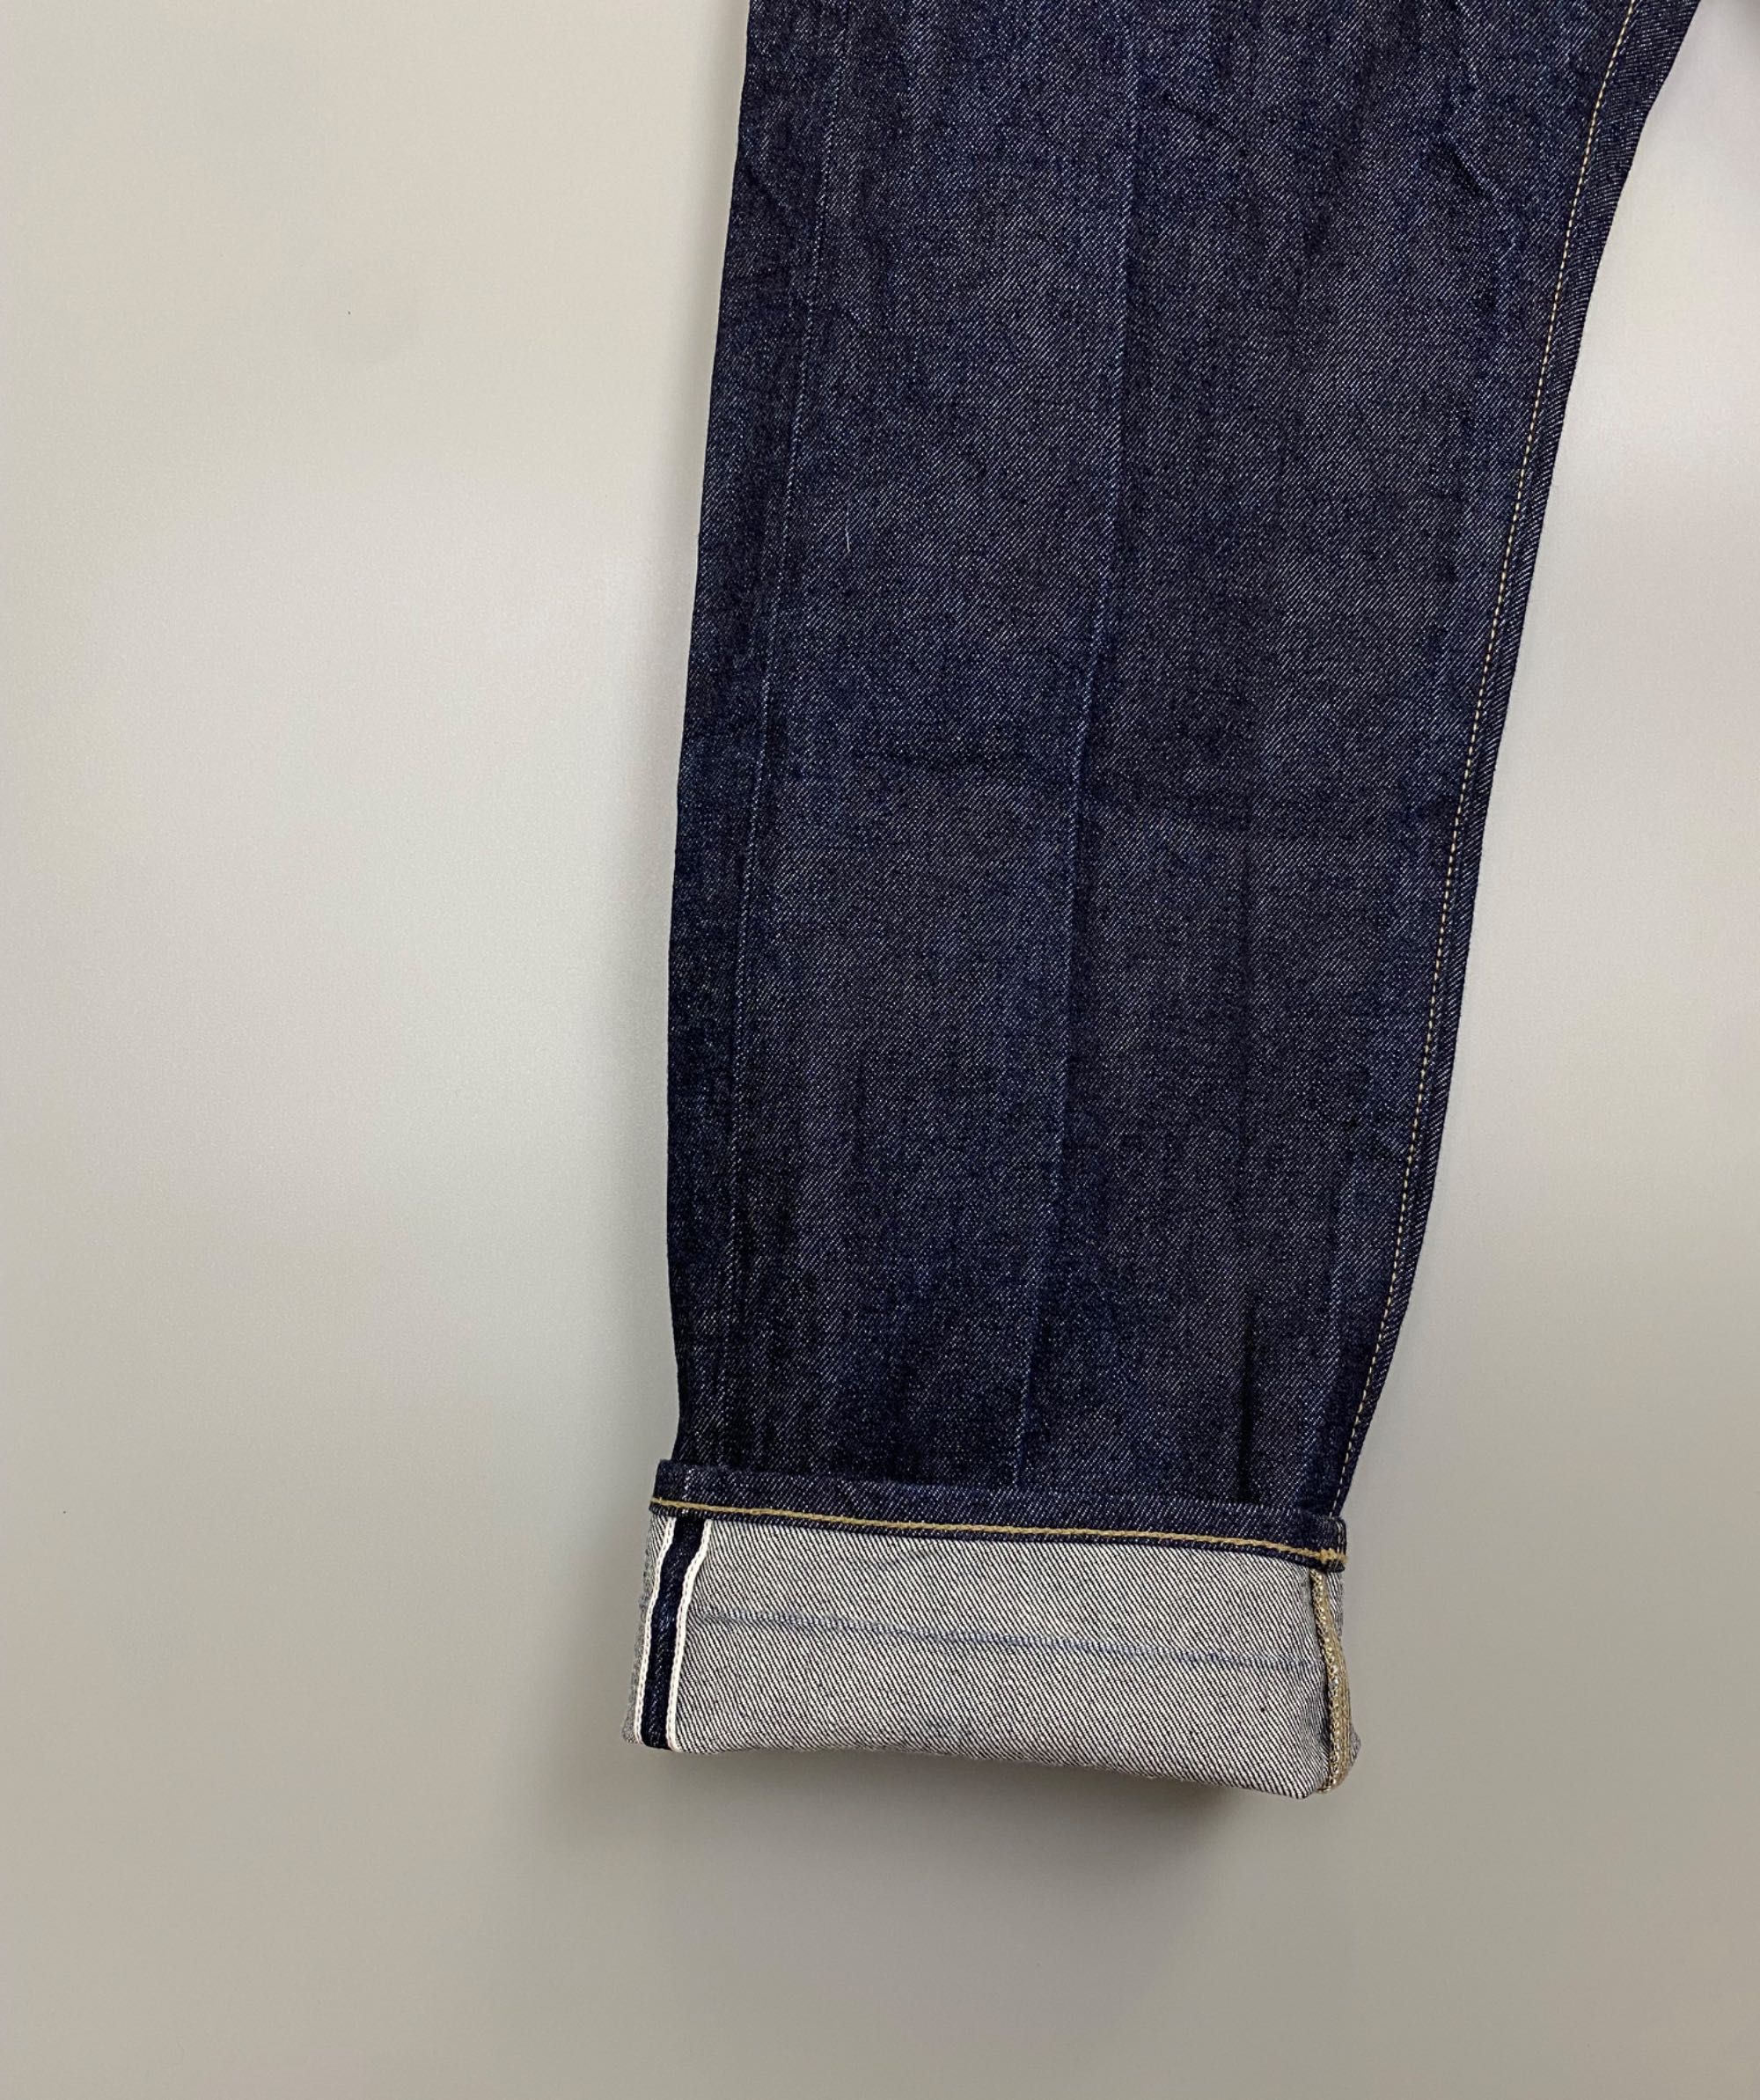 Uniqlo Selvedge Чоловічі джинси